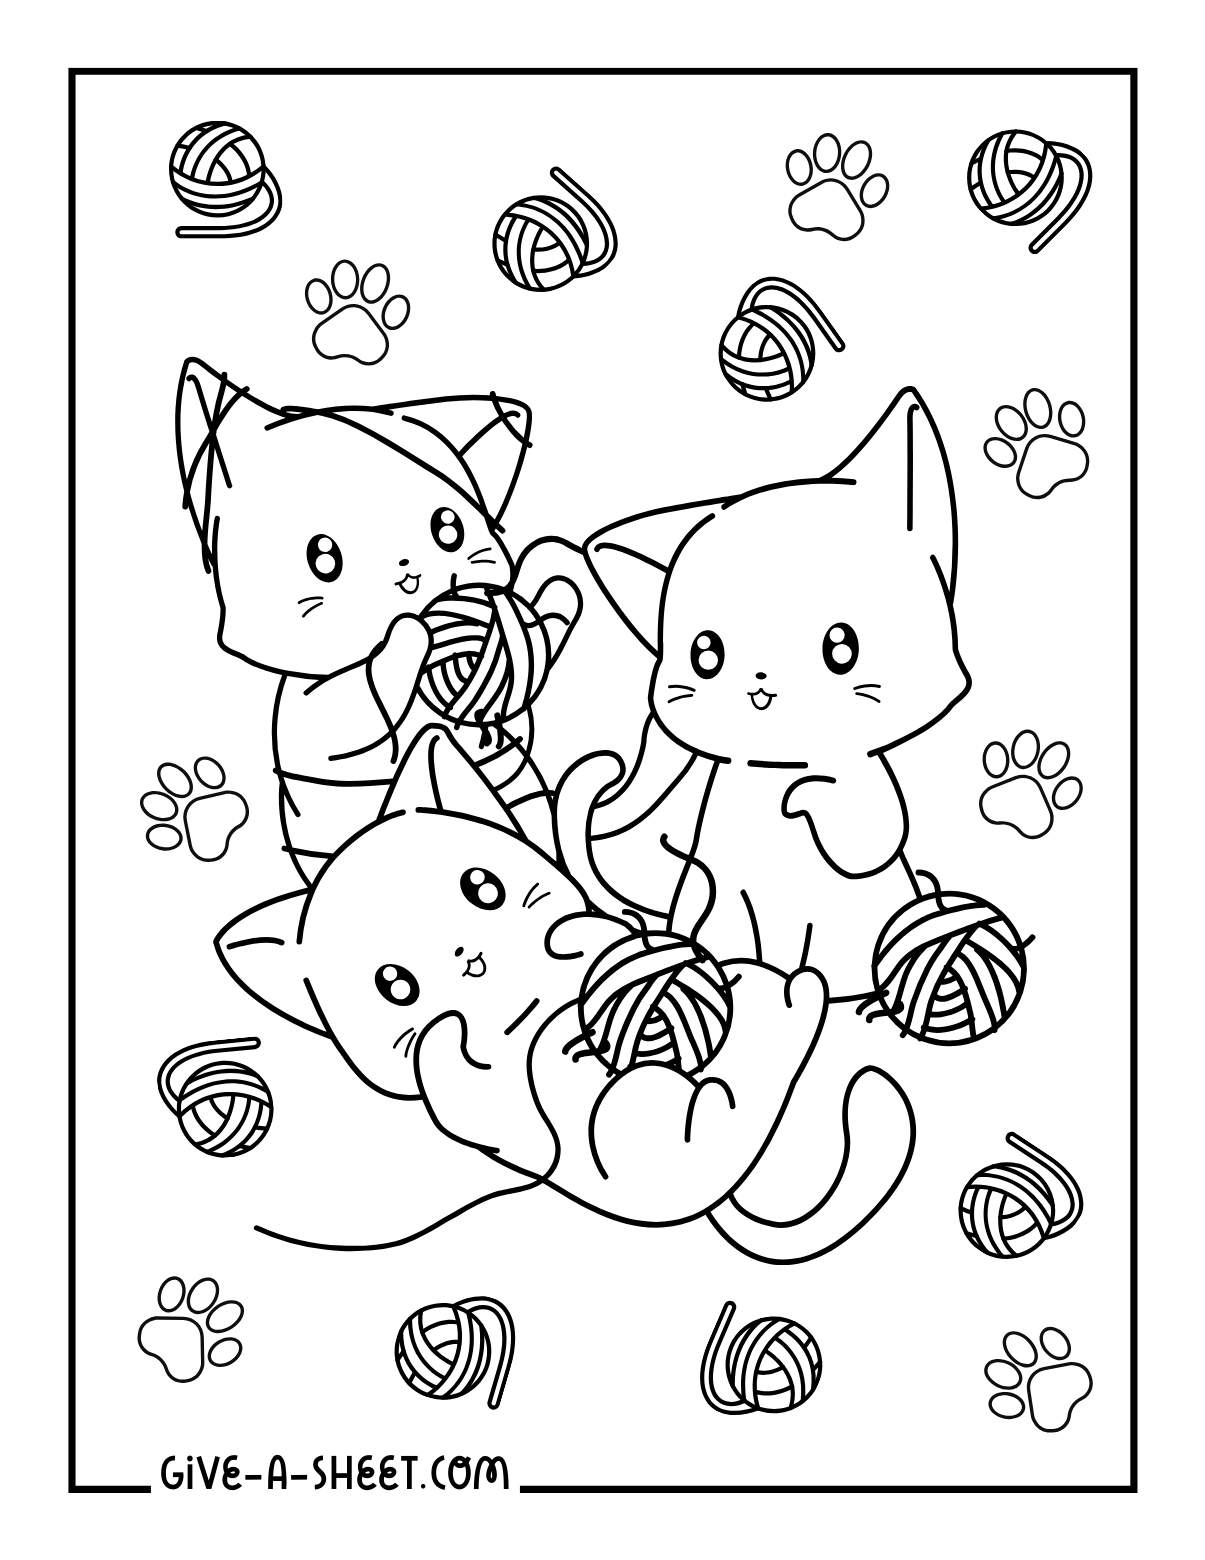 Kawaii kittens crochet amigurumi patterns coloring sheet.